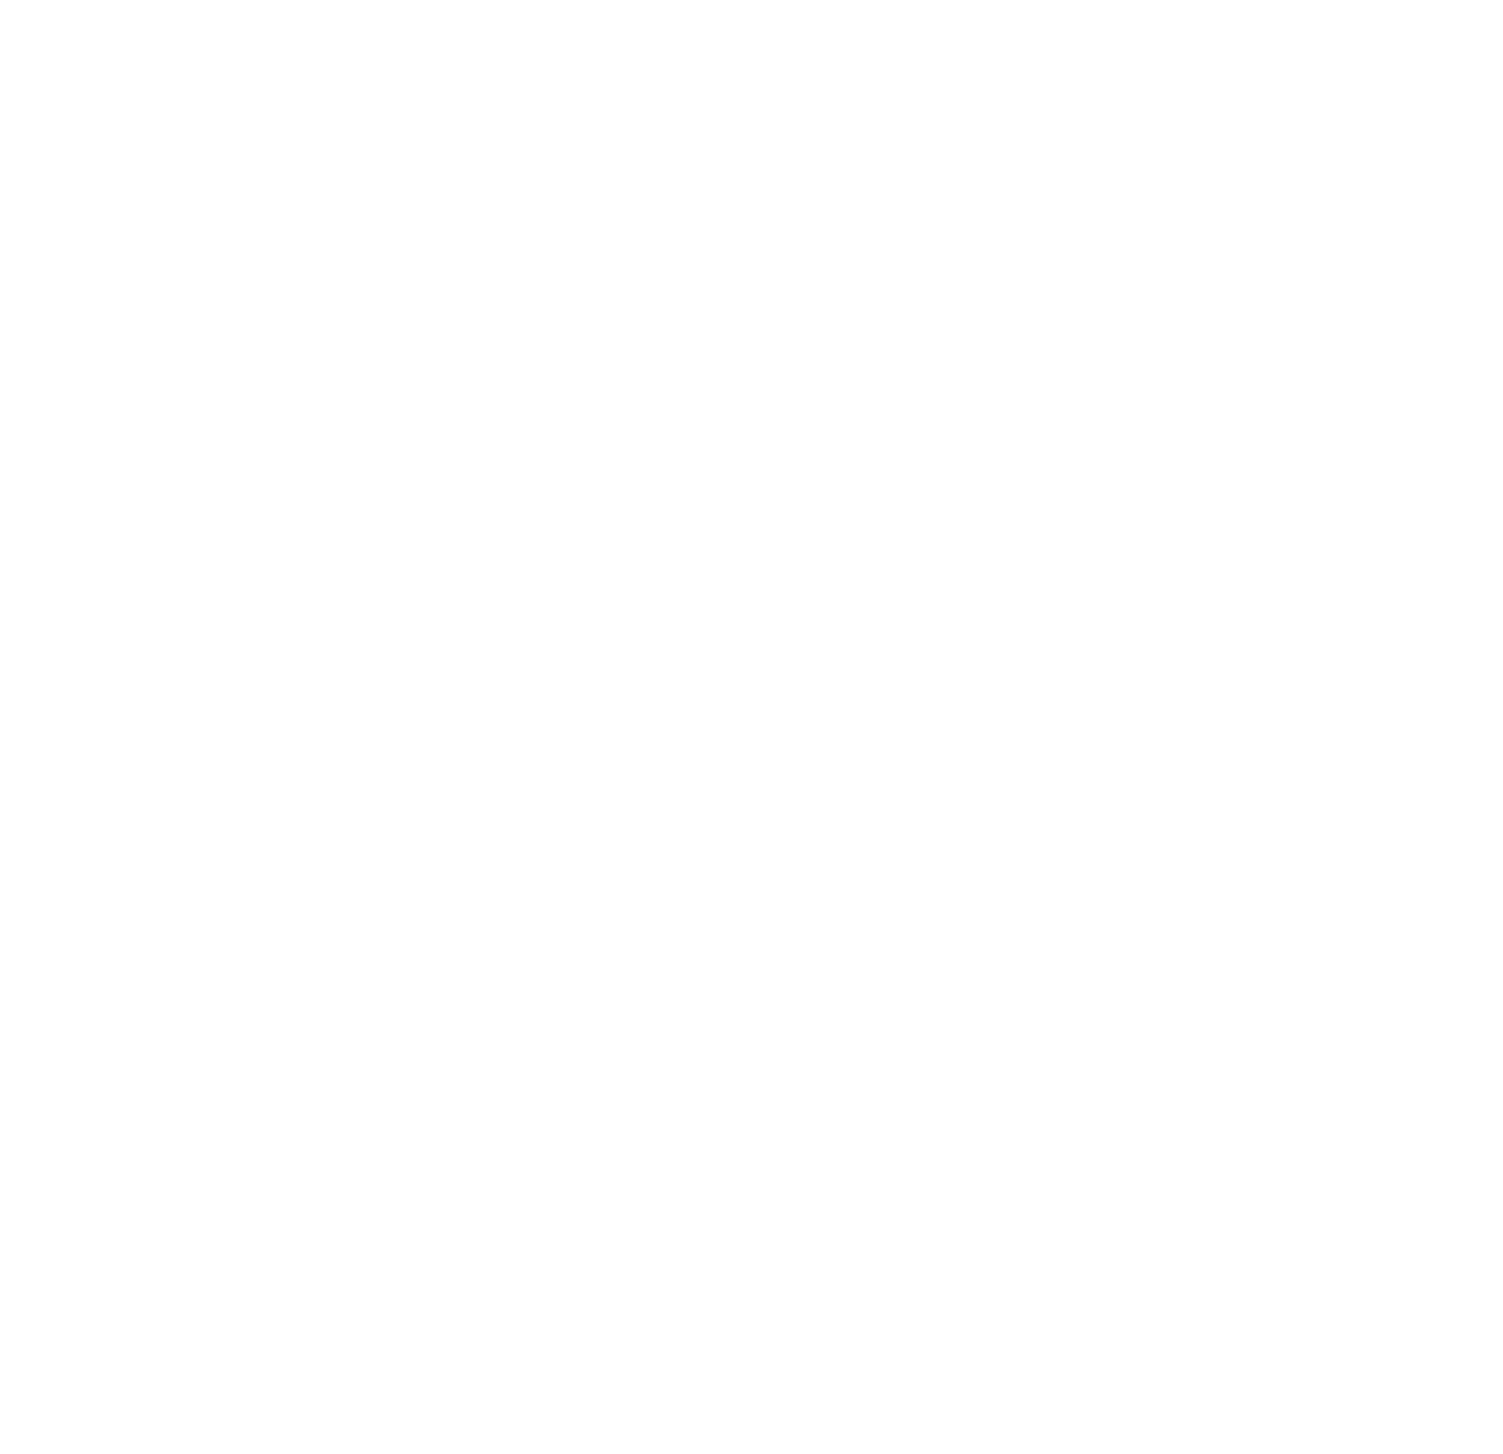 Energy Focus logo for dark backgrounds (transparent PNG)